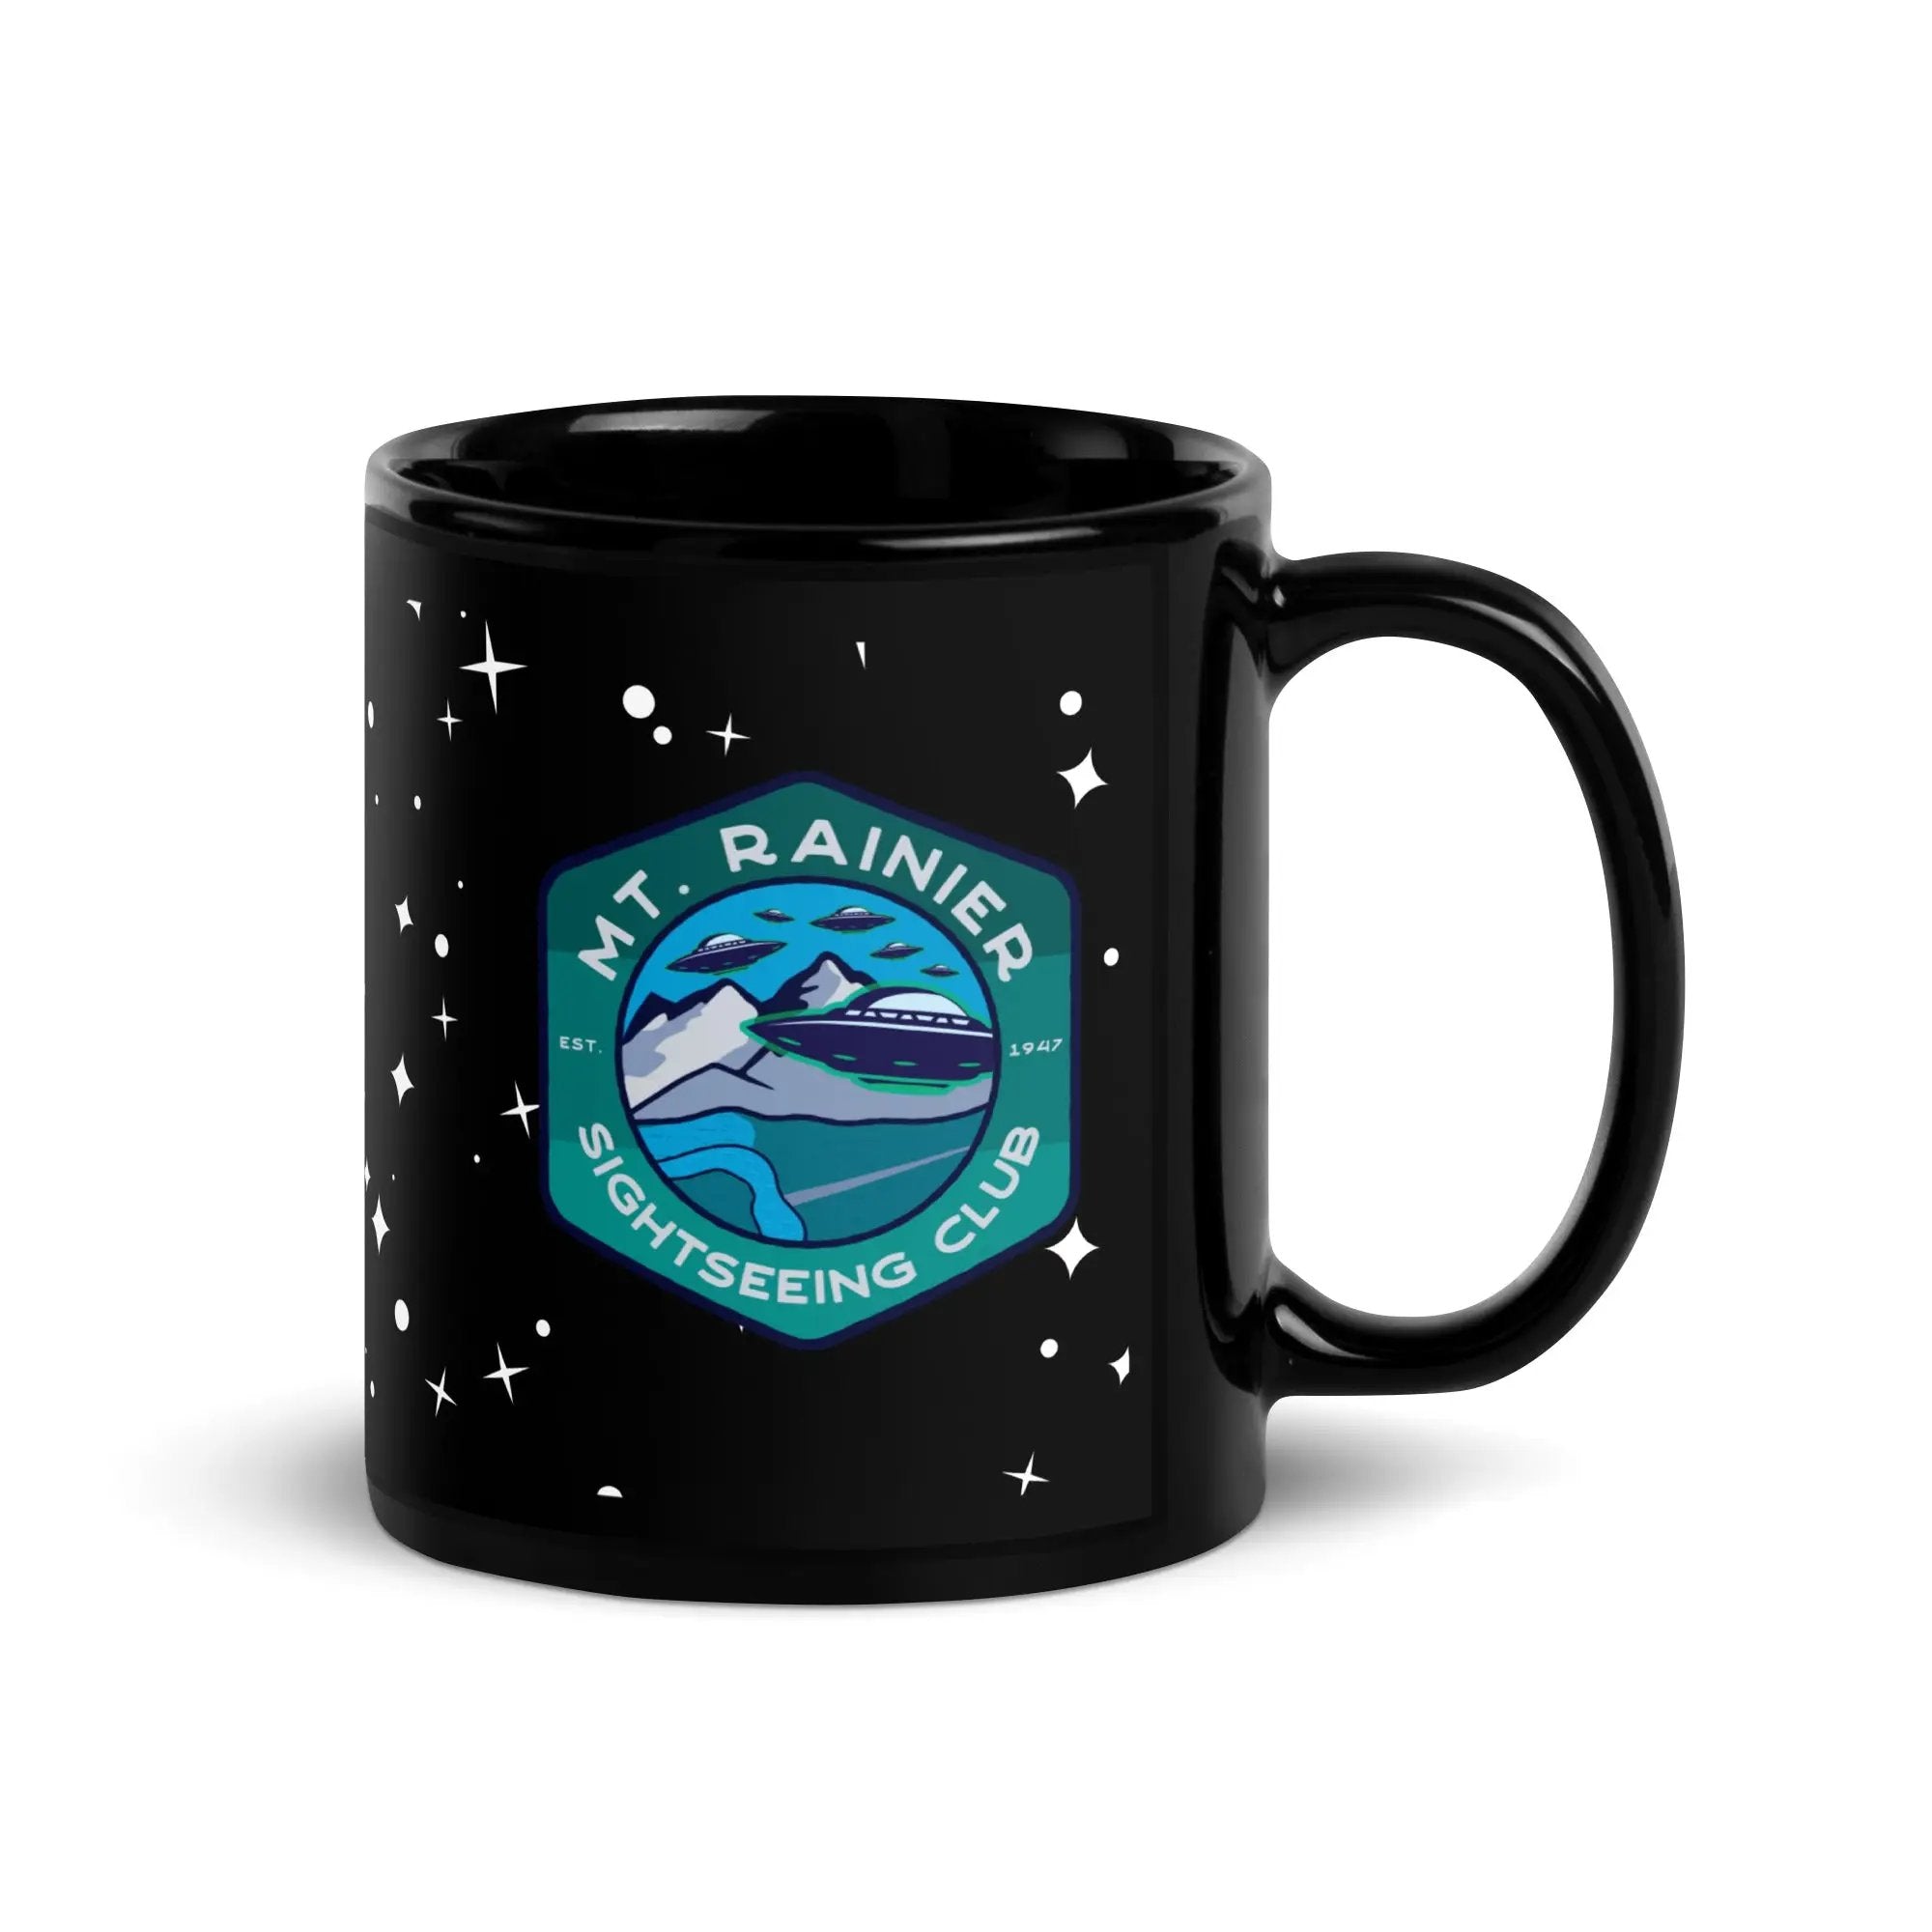 a black coffee mug with a mountain and stars on it